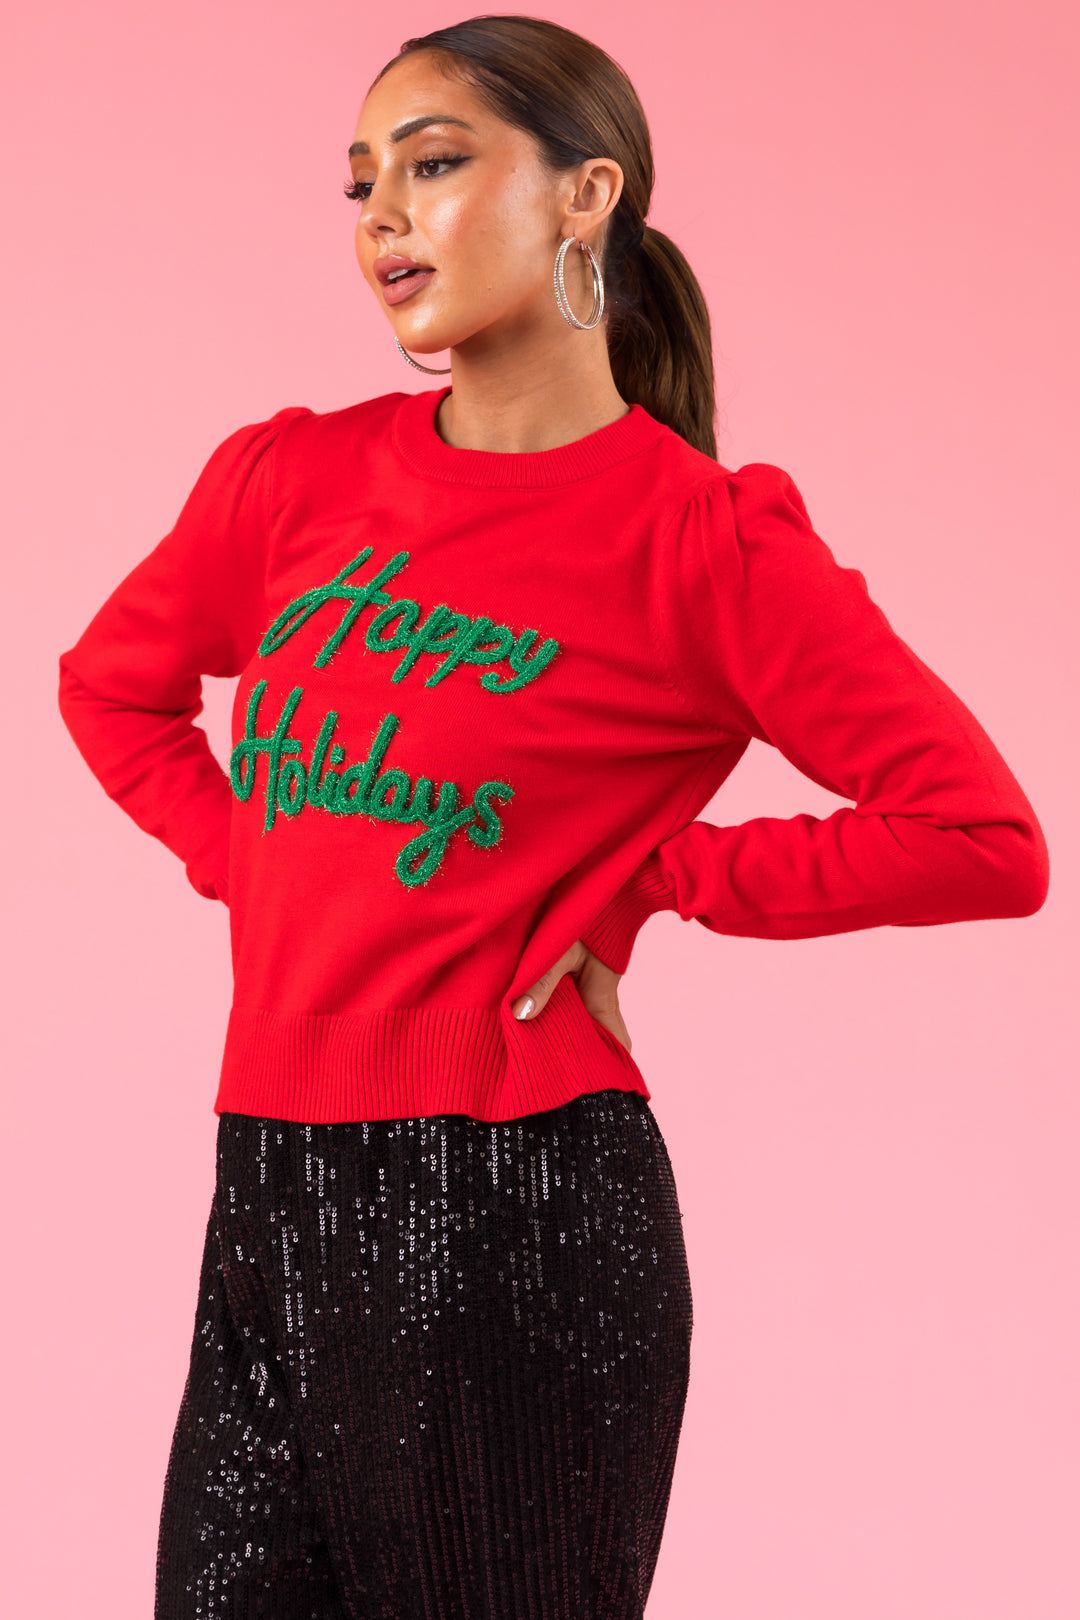 Lipstick 'Happy Holidays' Sparkle Knit Sweater & Lime Lush